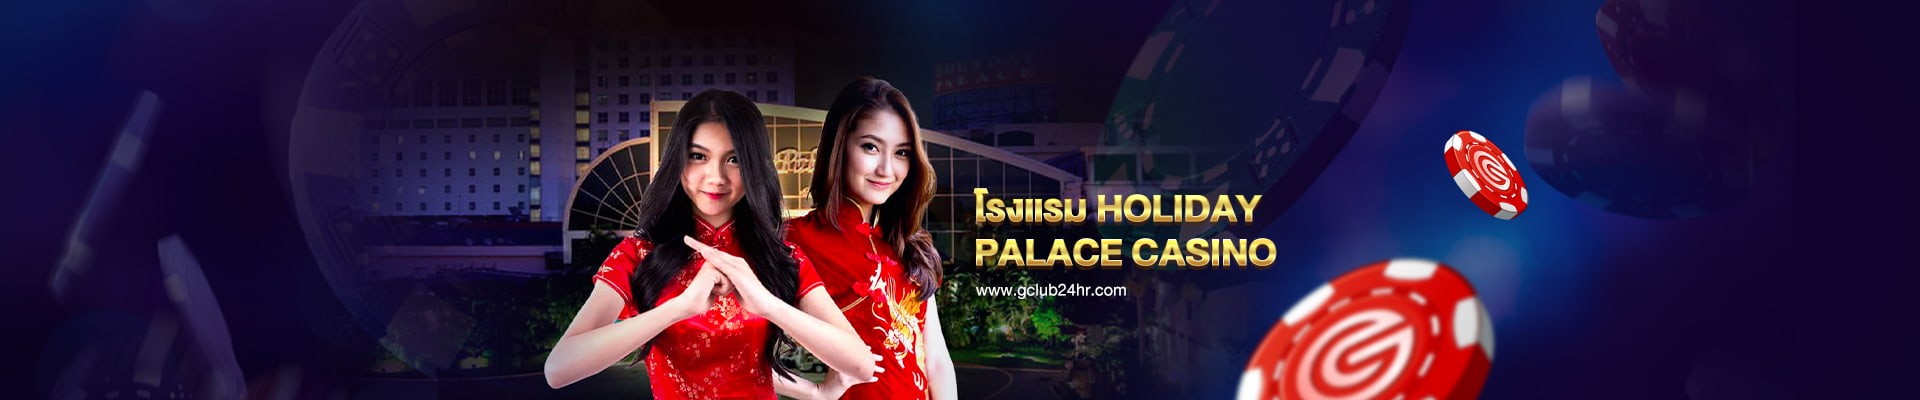 gclub24hr_casino_online_holiday_palace_casino